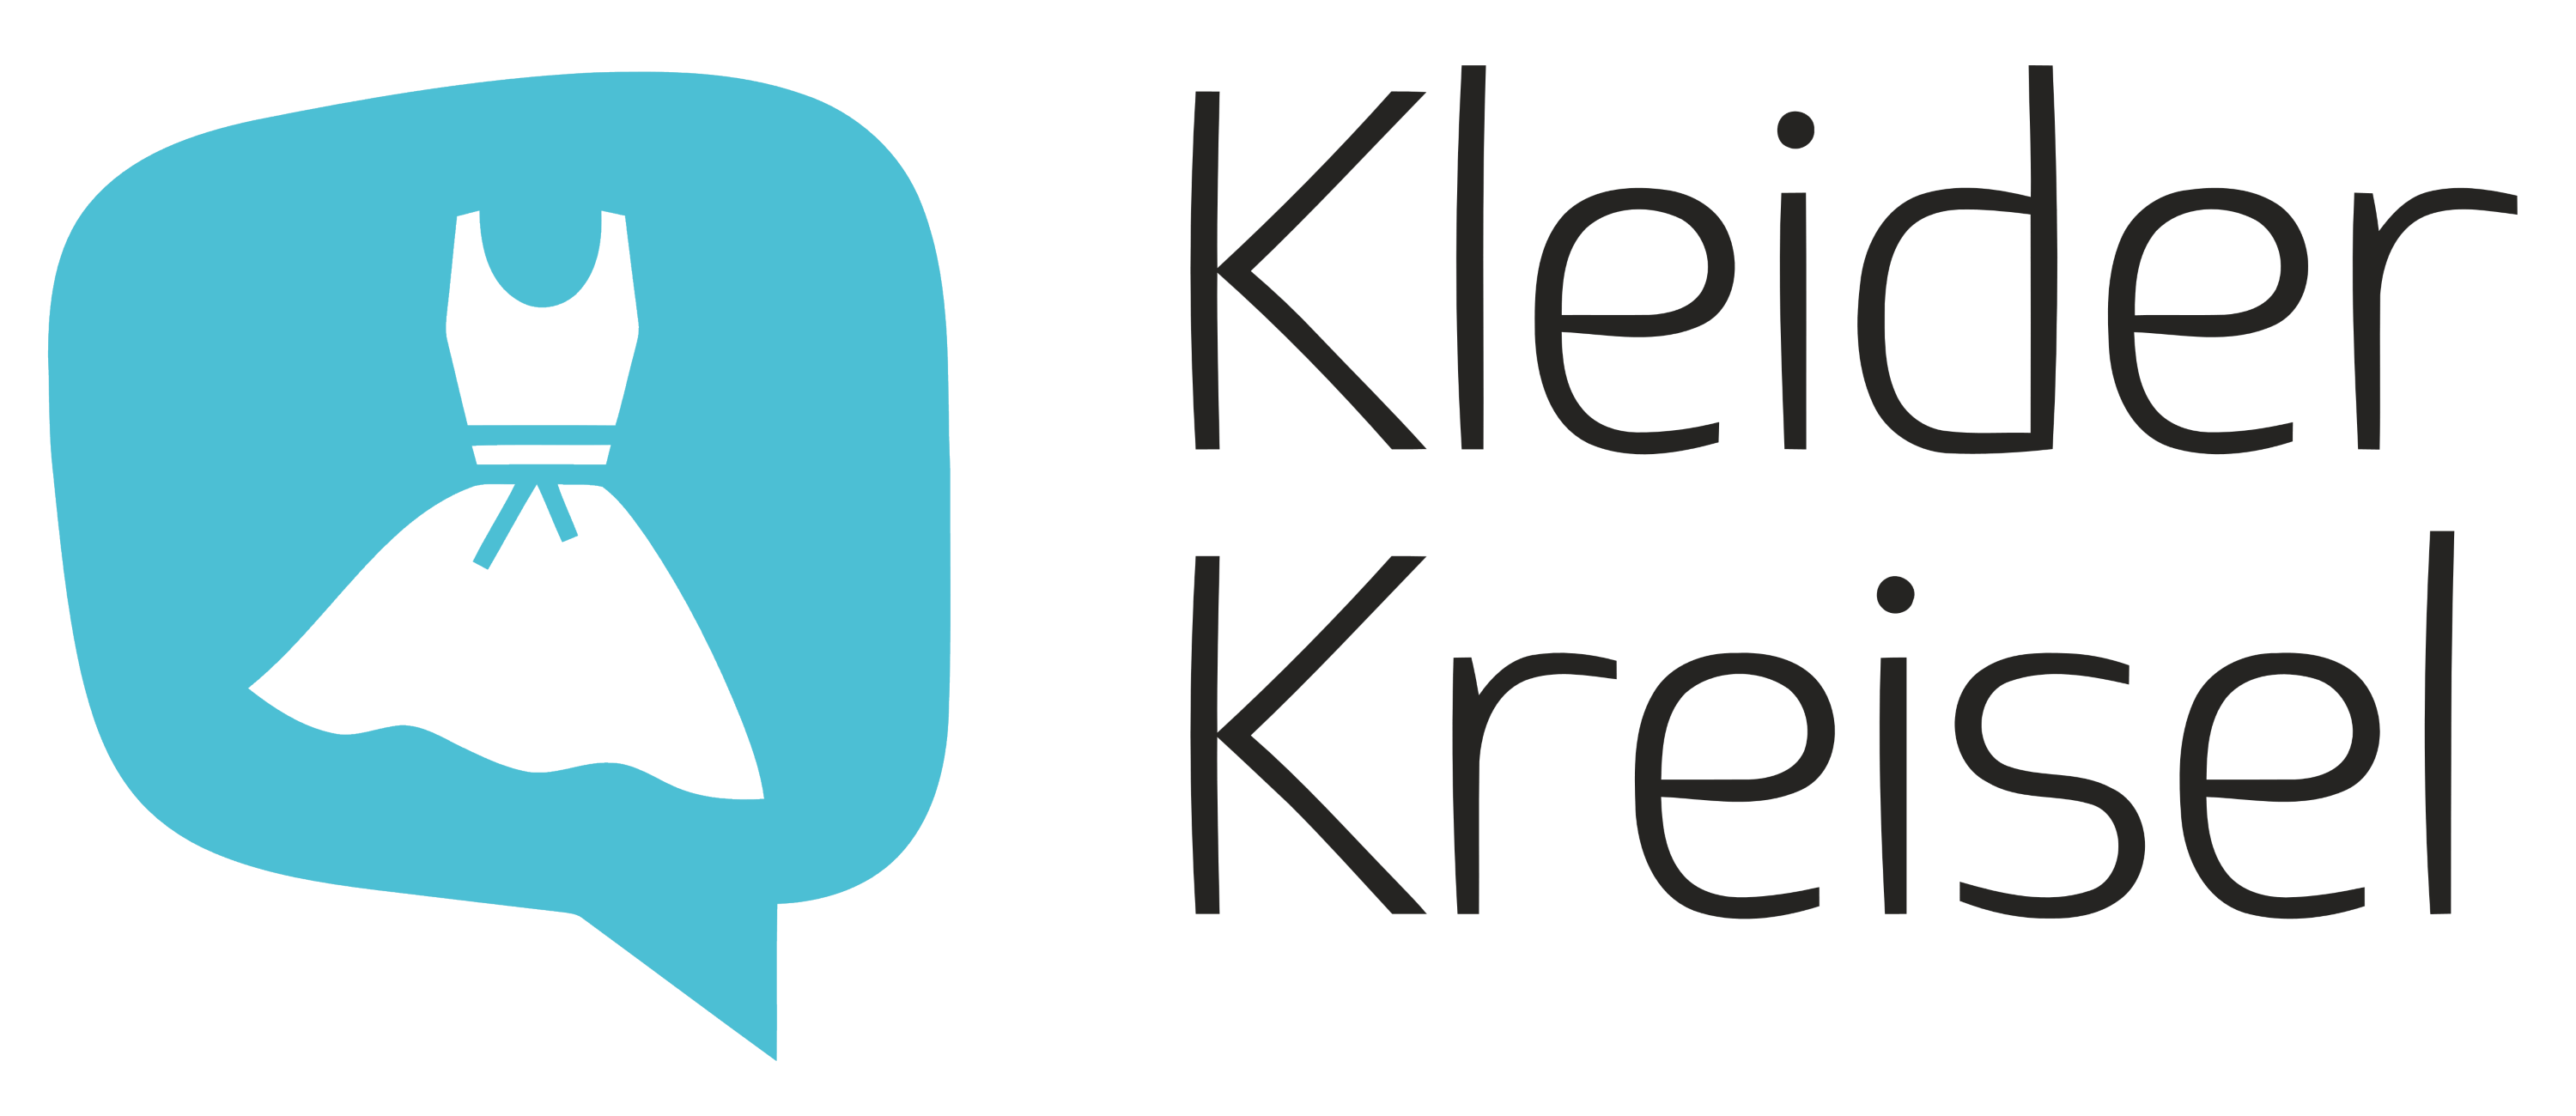 KleiderKreisel logo, logotype